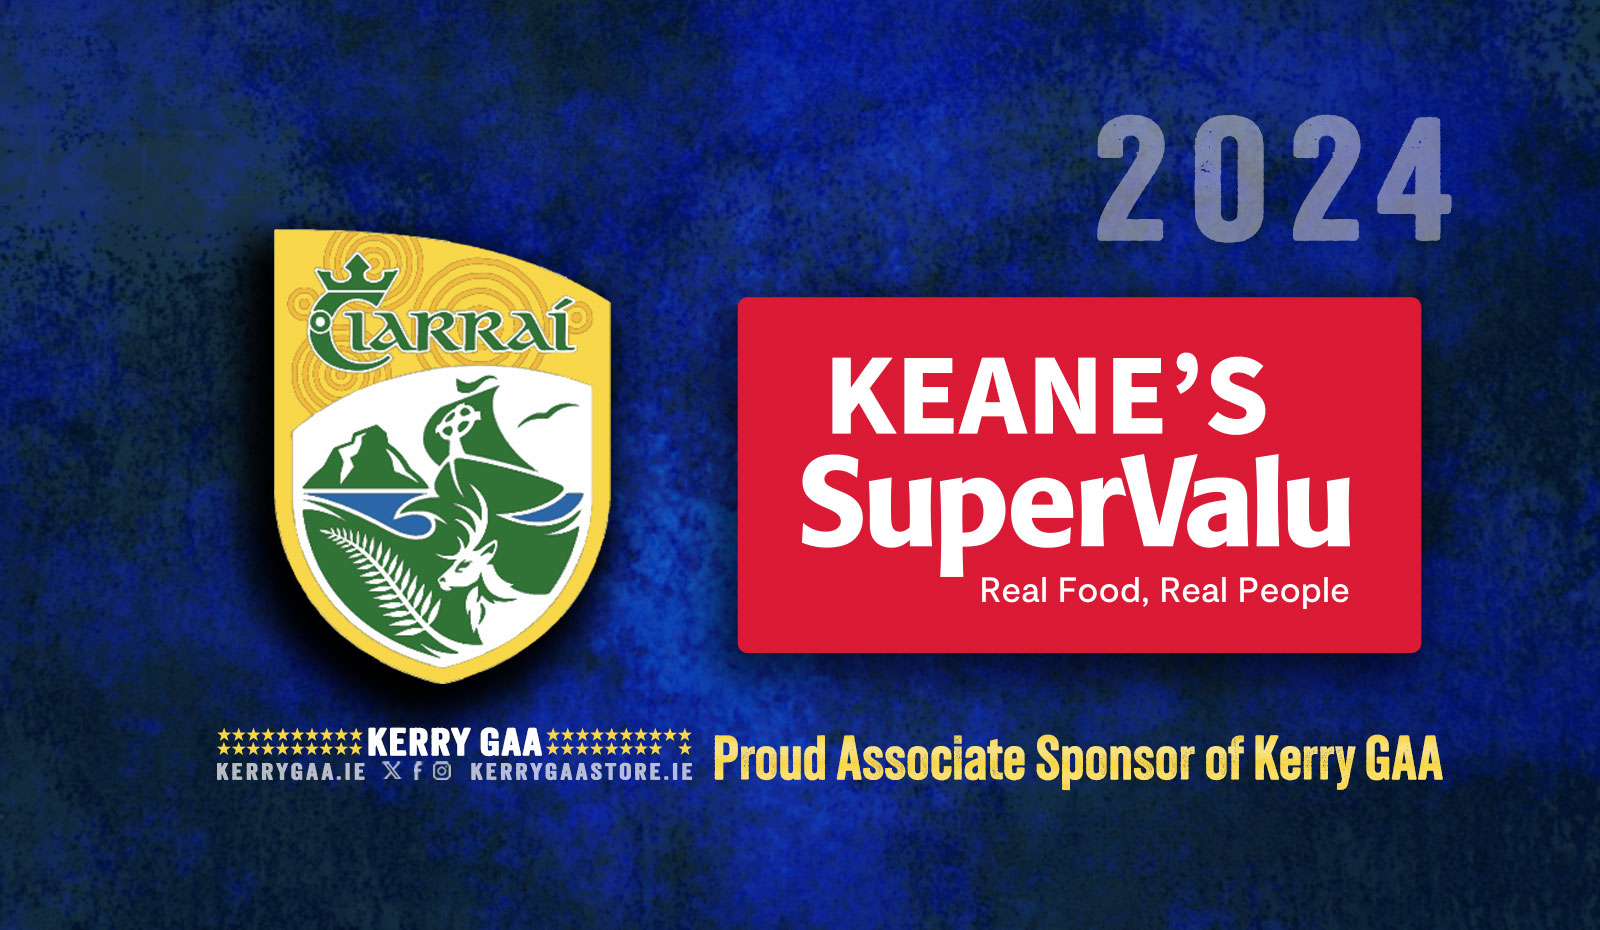 Launch of 2024 Keane’s SuperValu Minor League